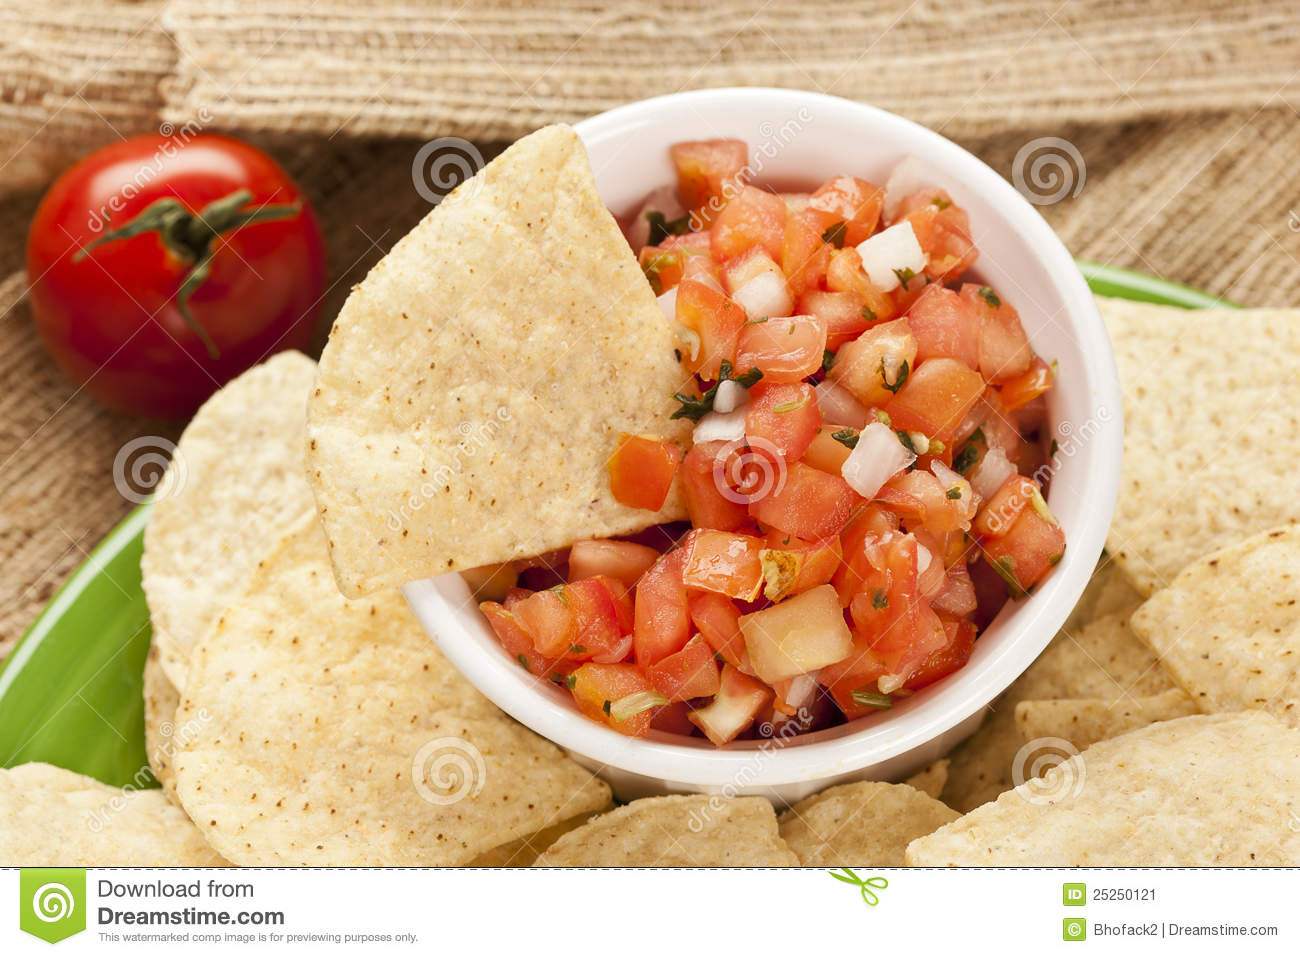 Tortilla Chips And Salsa Stock Image   Image  25250121